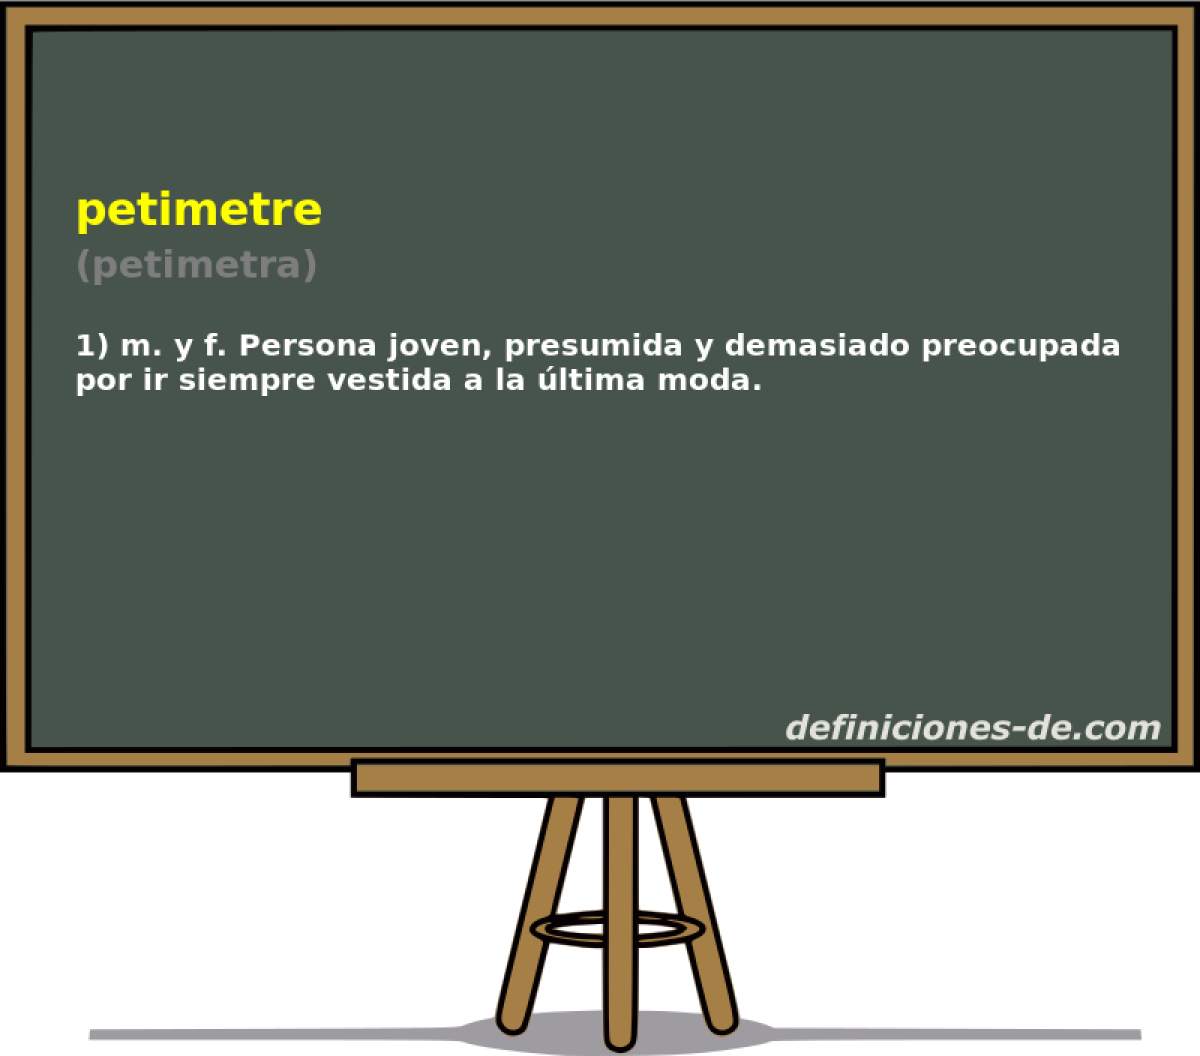 petimetre (petimetra)